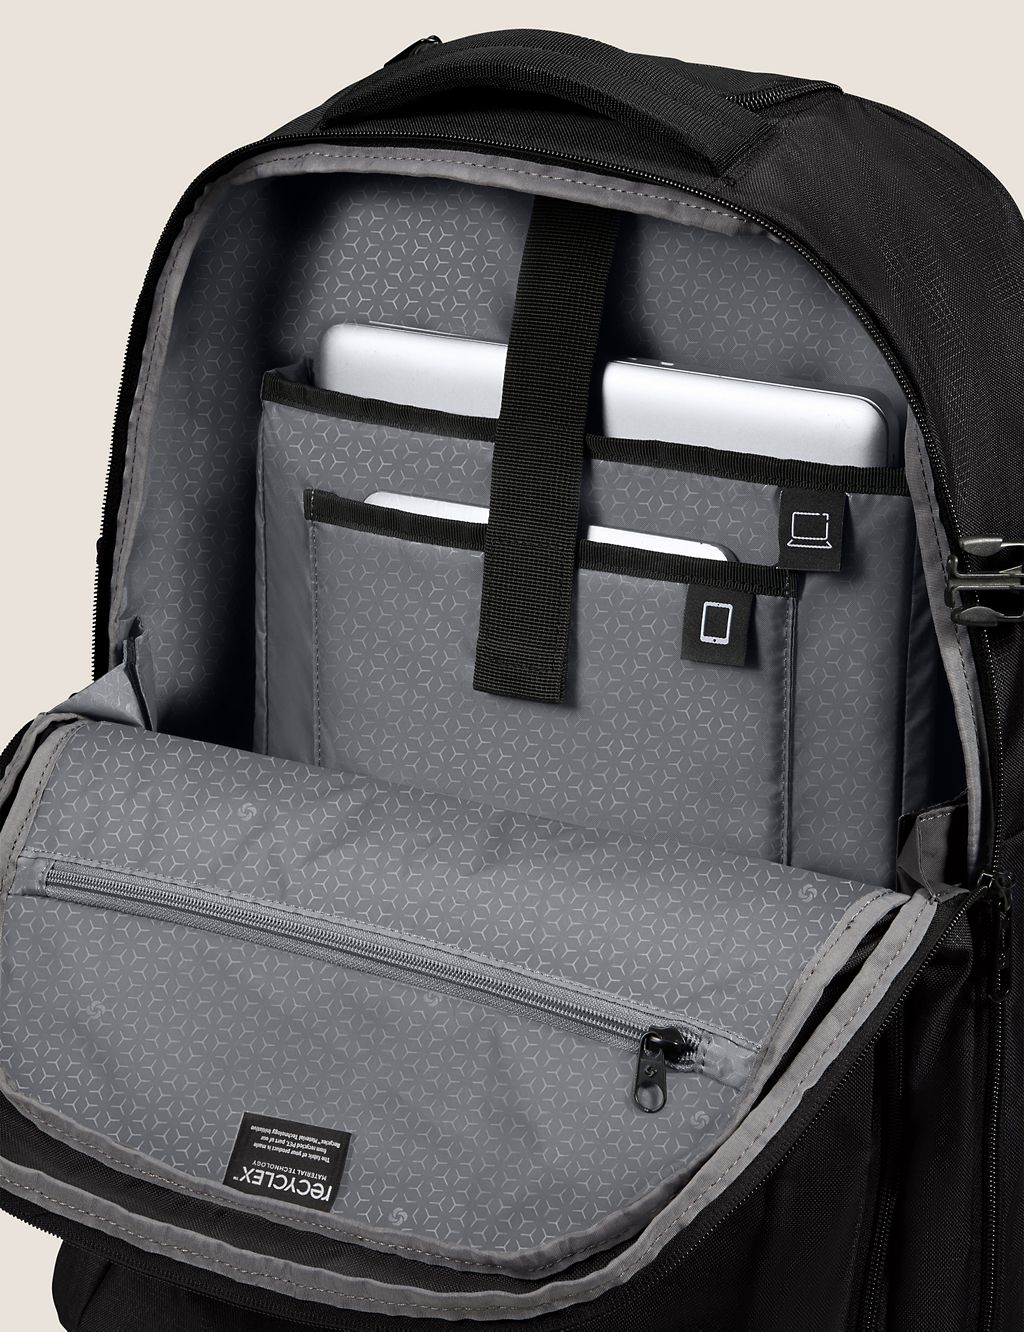 Roader 2 Wheel Laptop Backpack Suitcase 2 of 3